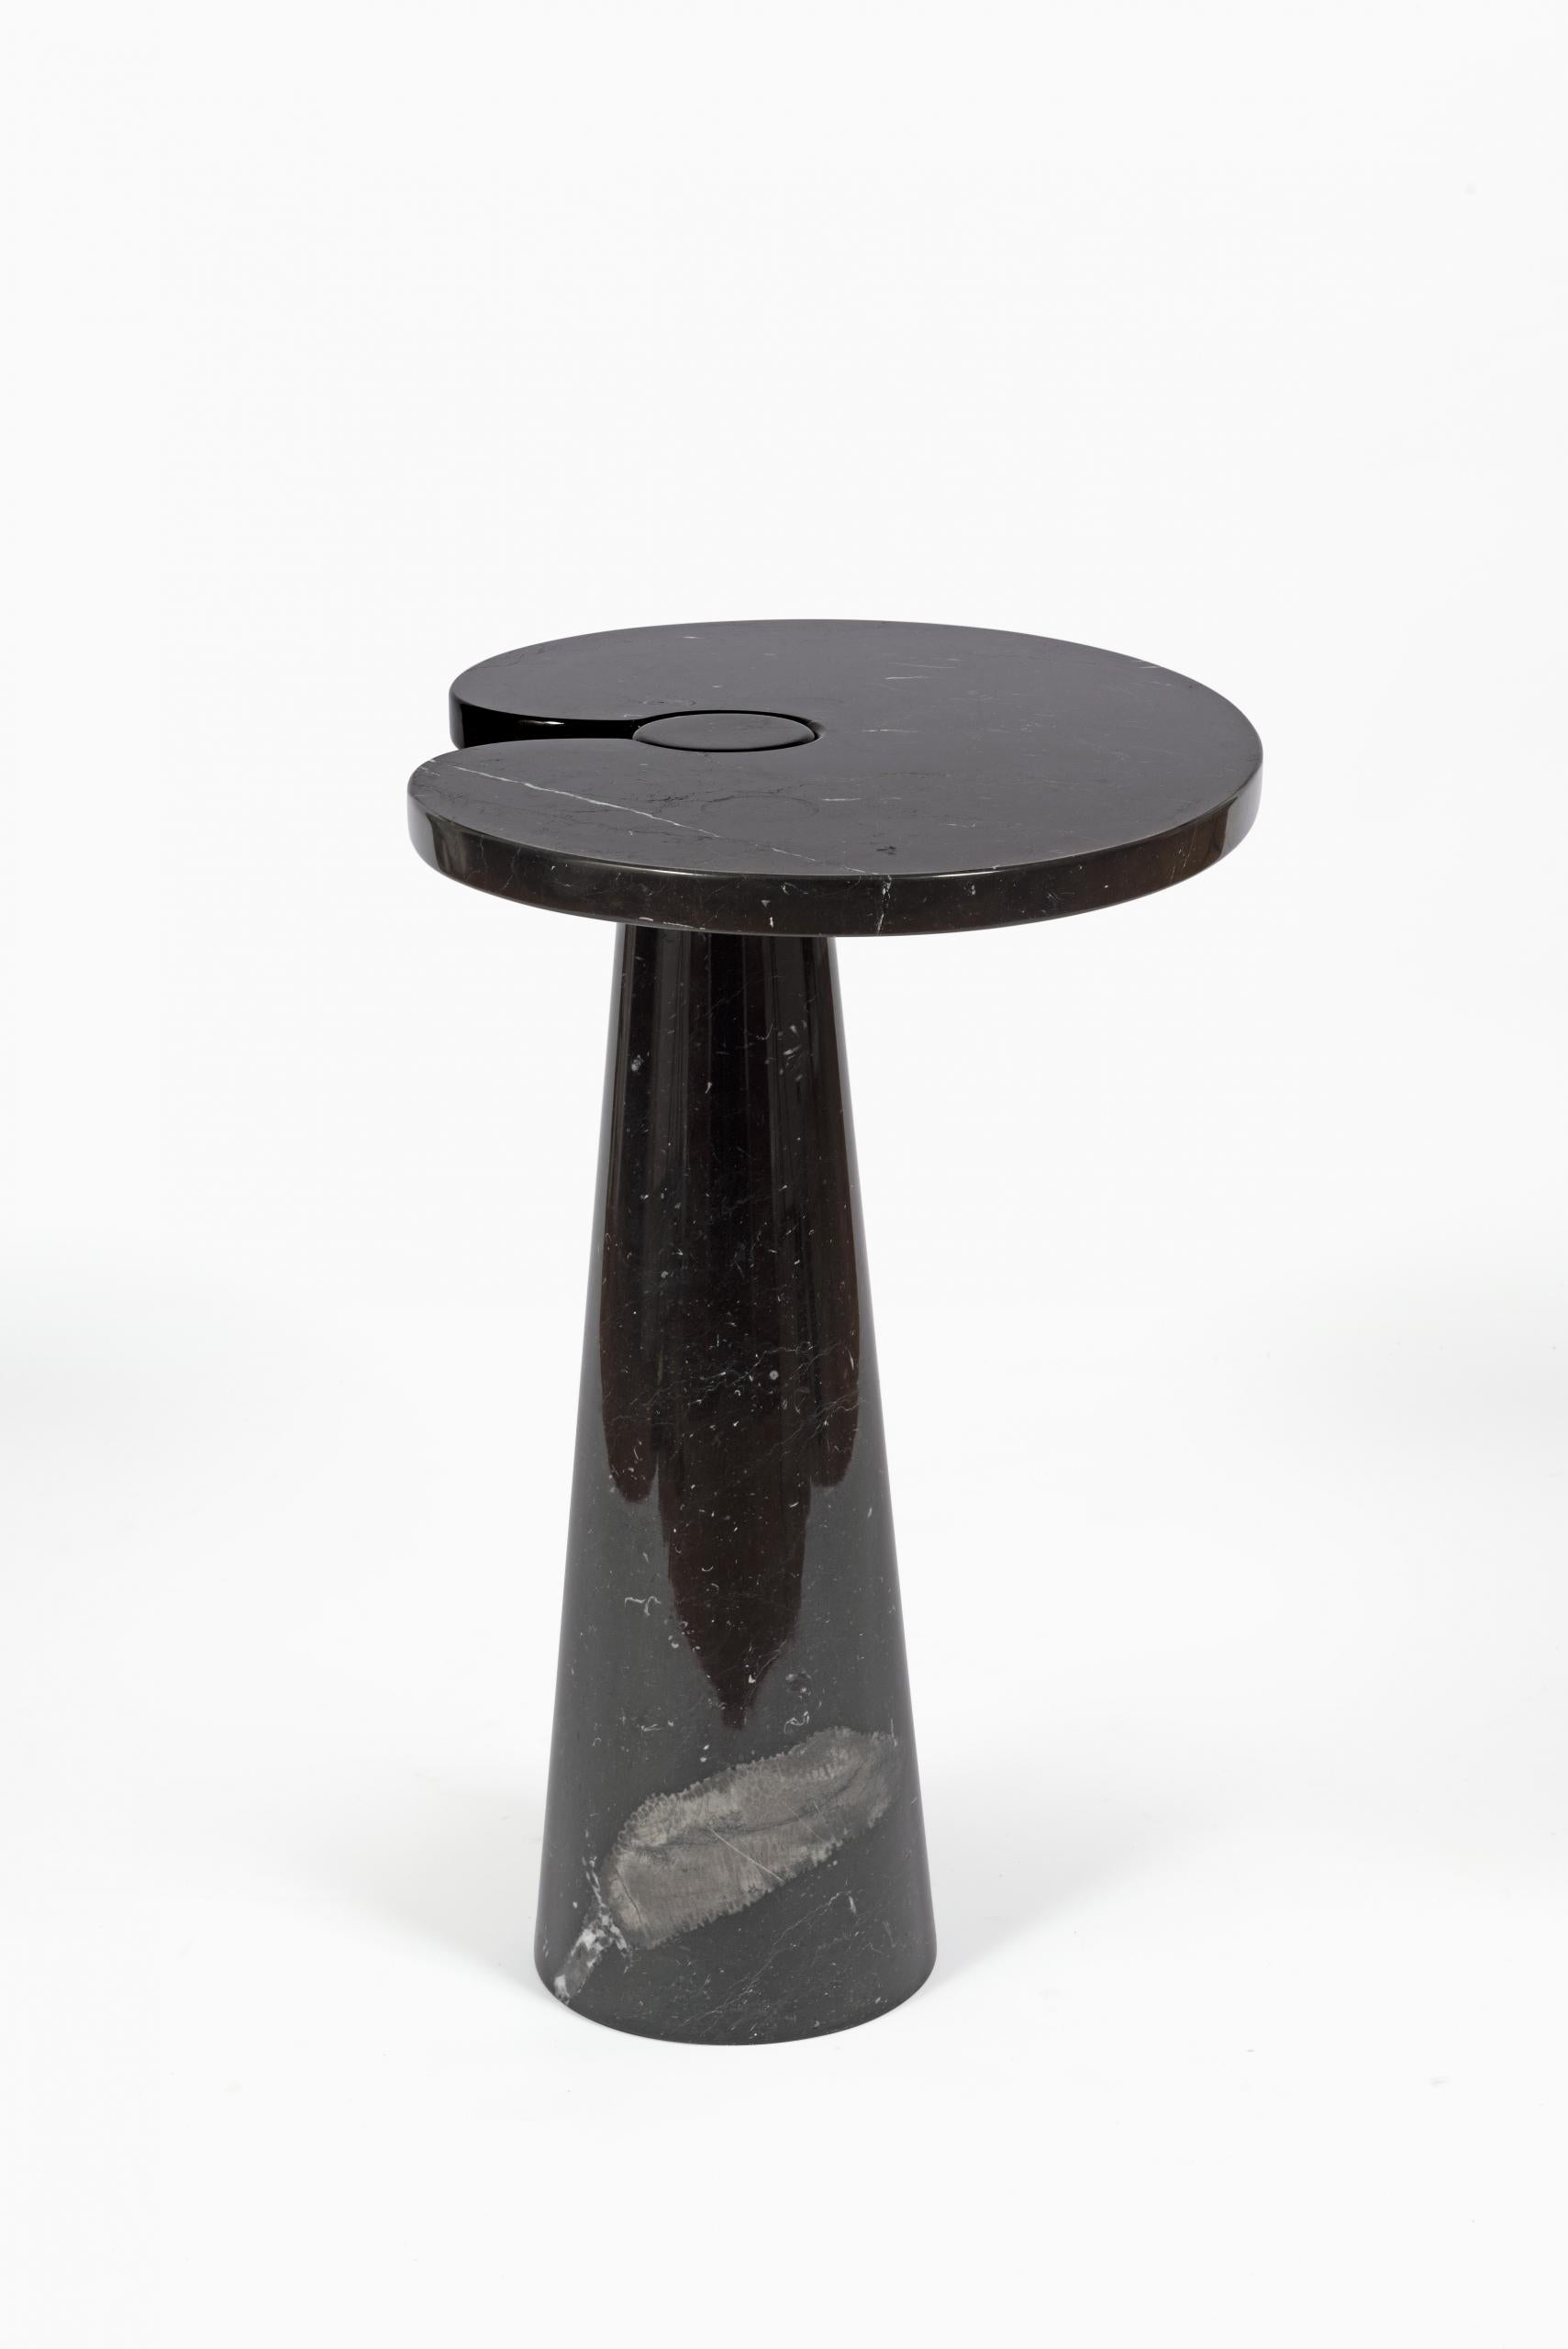 Mid-Century Modern Table Noire D’appoint “Eros” D’Angelo Mangiarotti Pour Skipper, 1975 For Sale